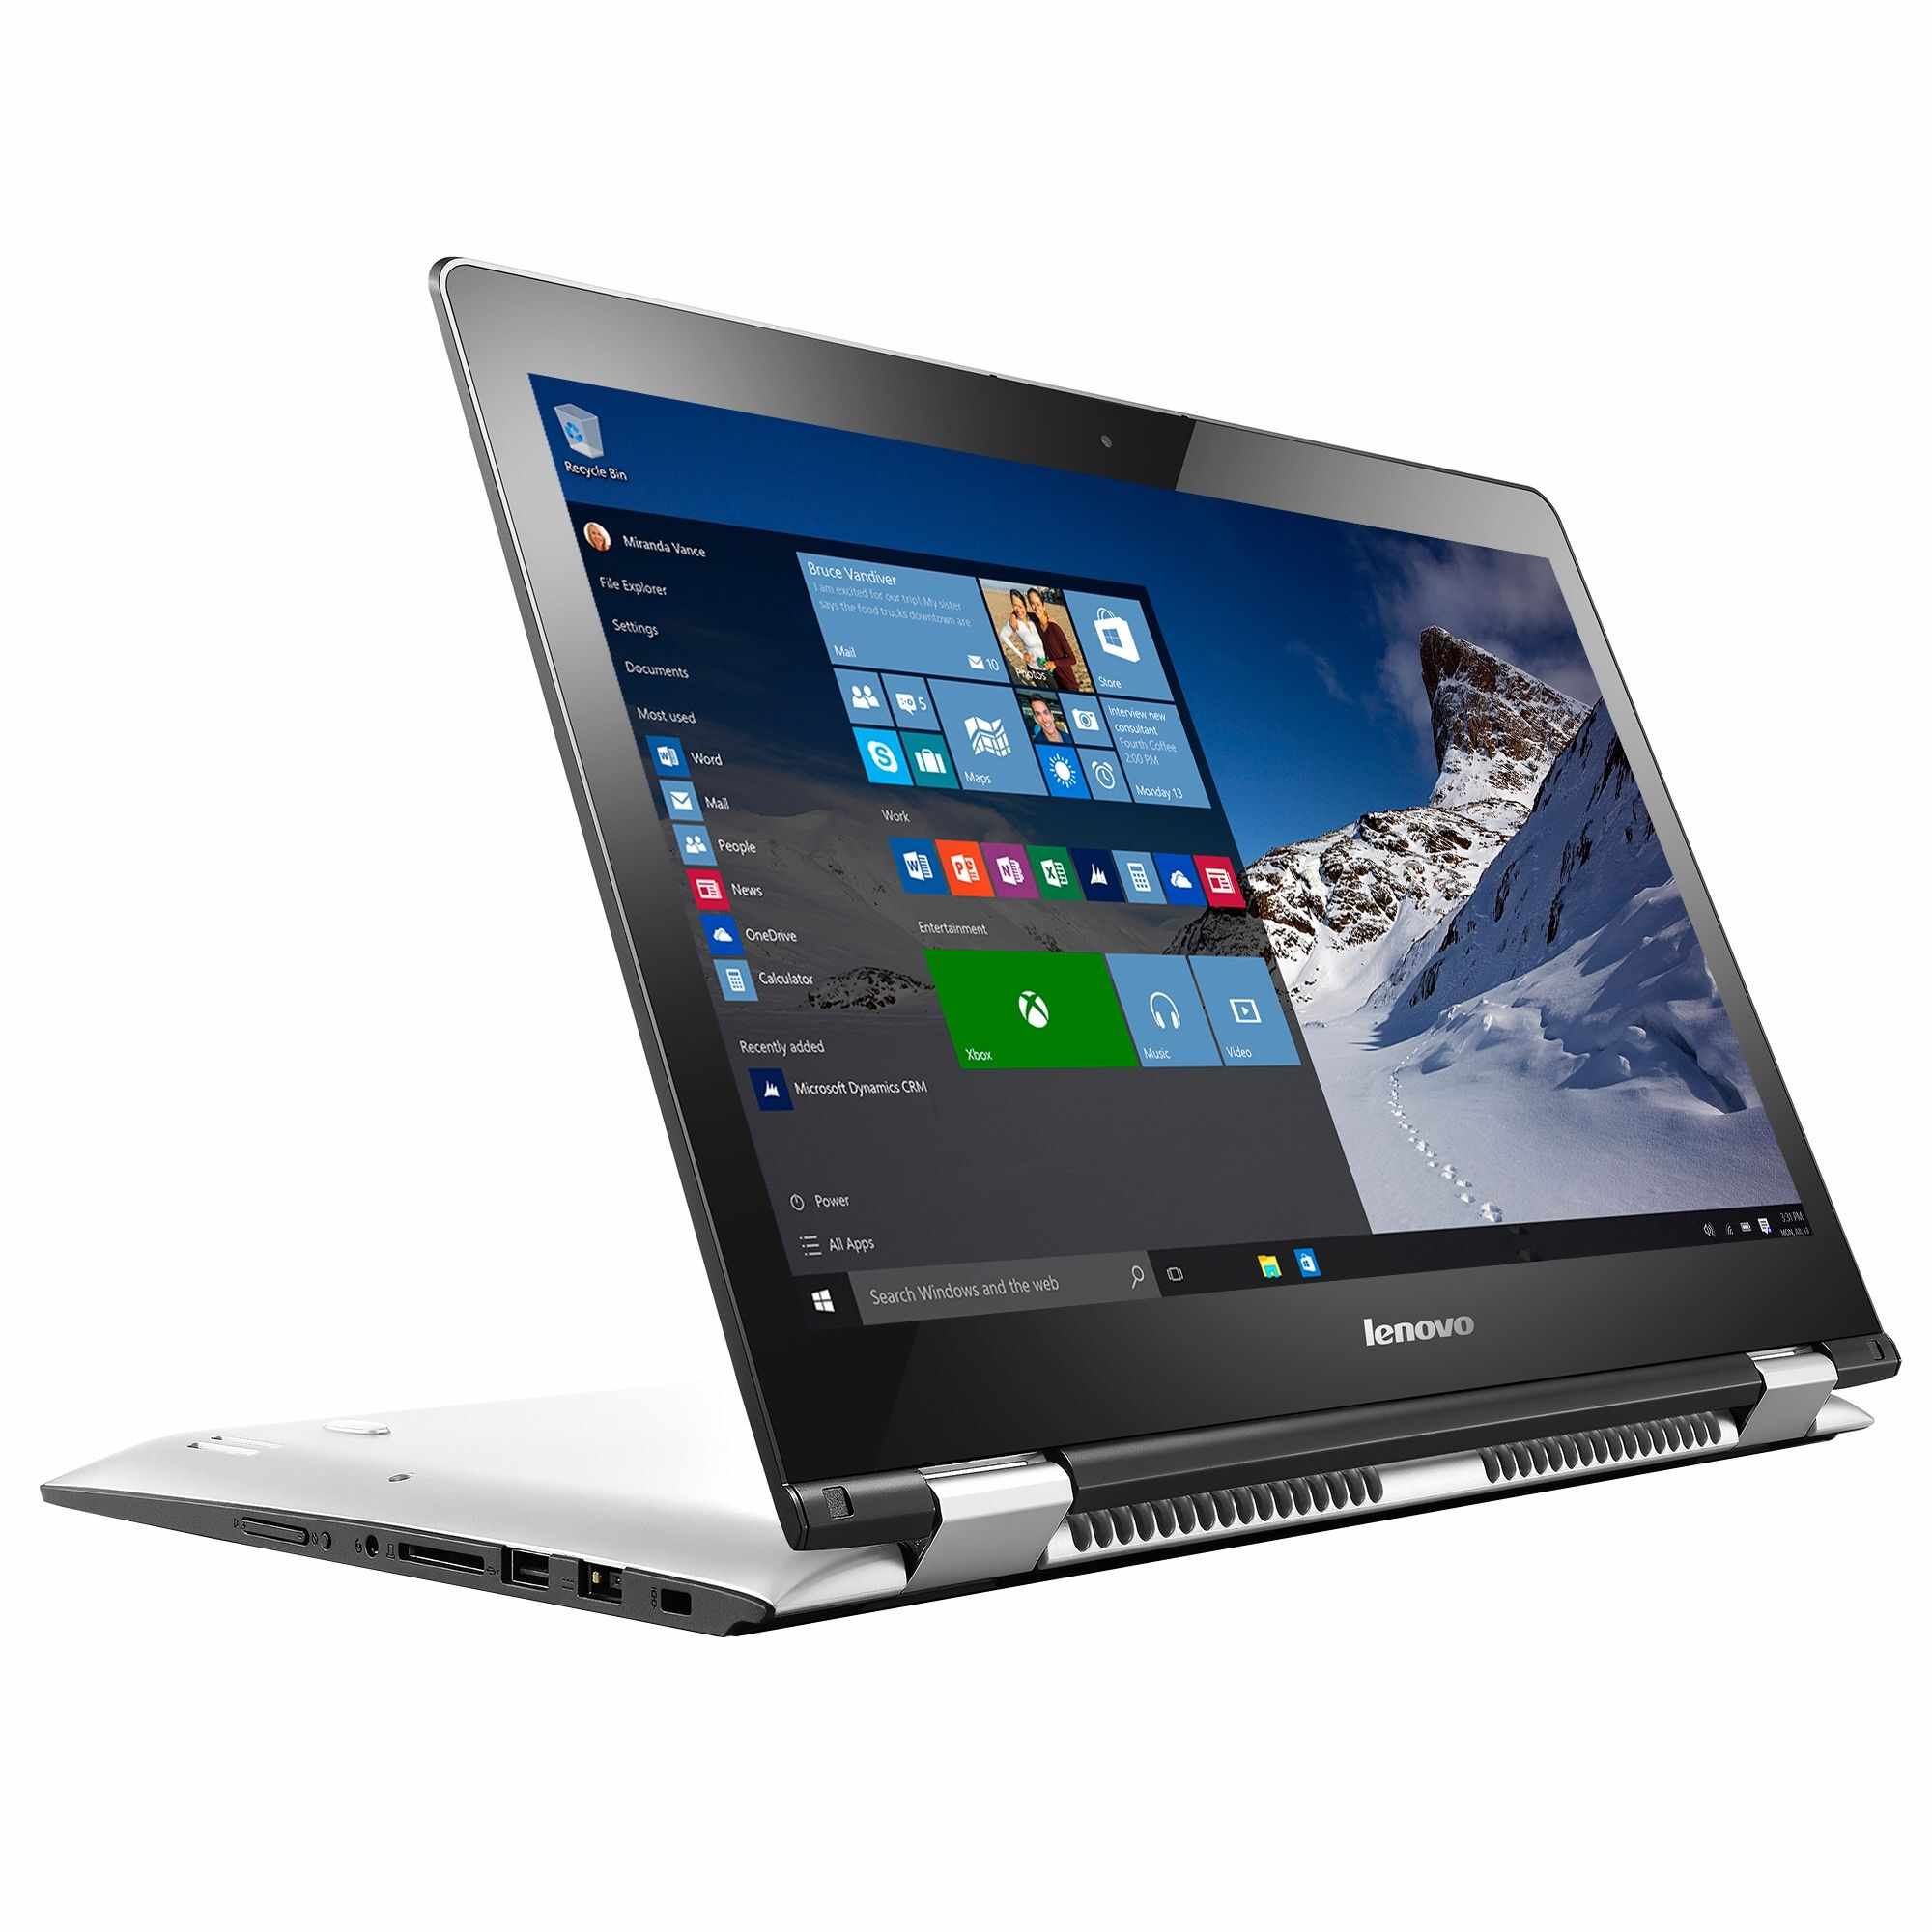 Laptop 2 in 1 Lenovo IdeaPad Yoga 500-14, Intel Core i5-6200U, 4GB DDR3, SSHD 500GB, nVidia GeForce 920M 2GB, Windows 10